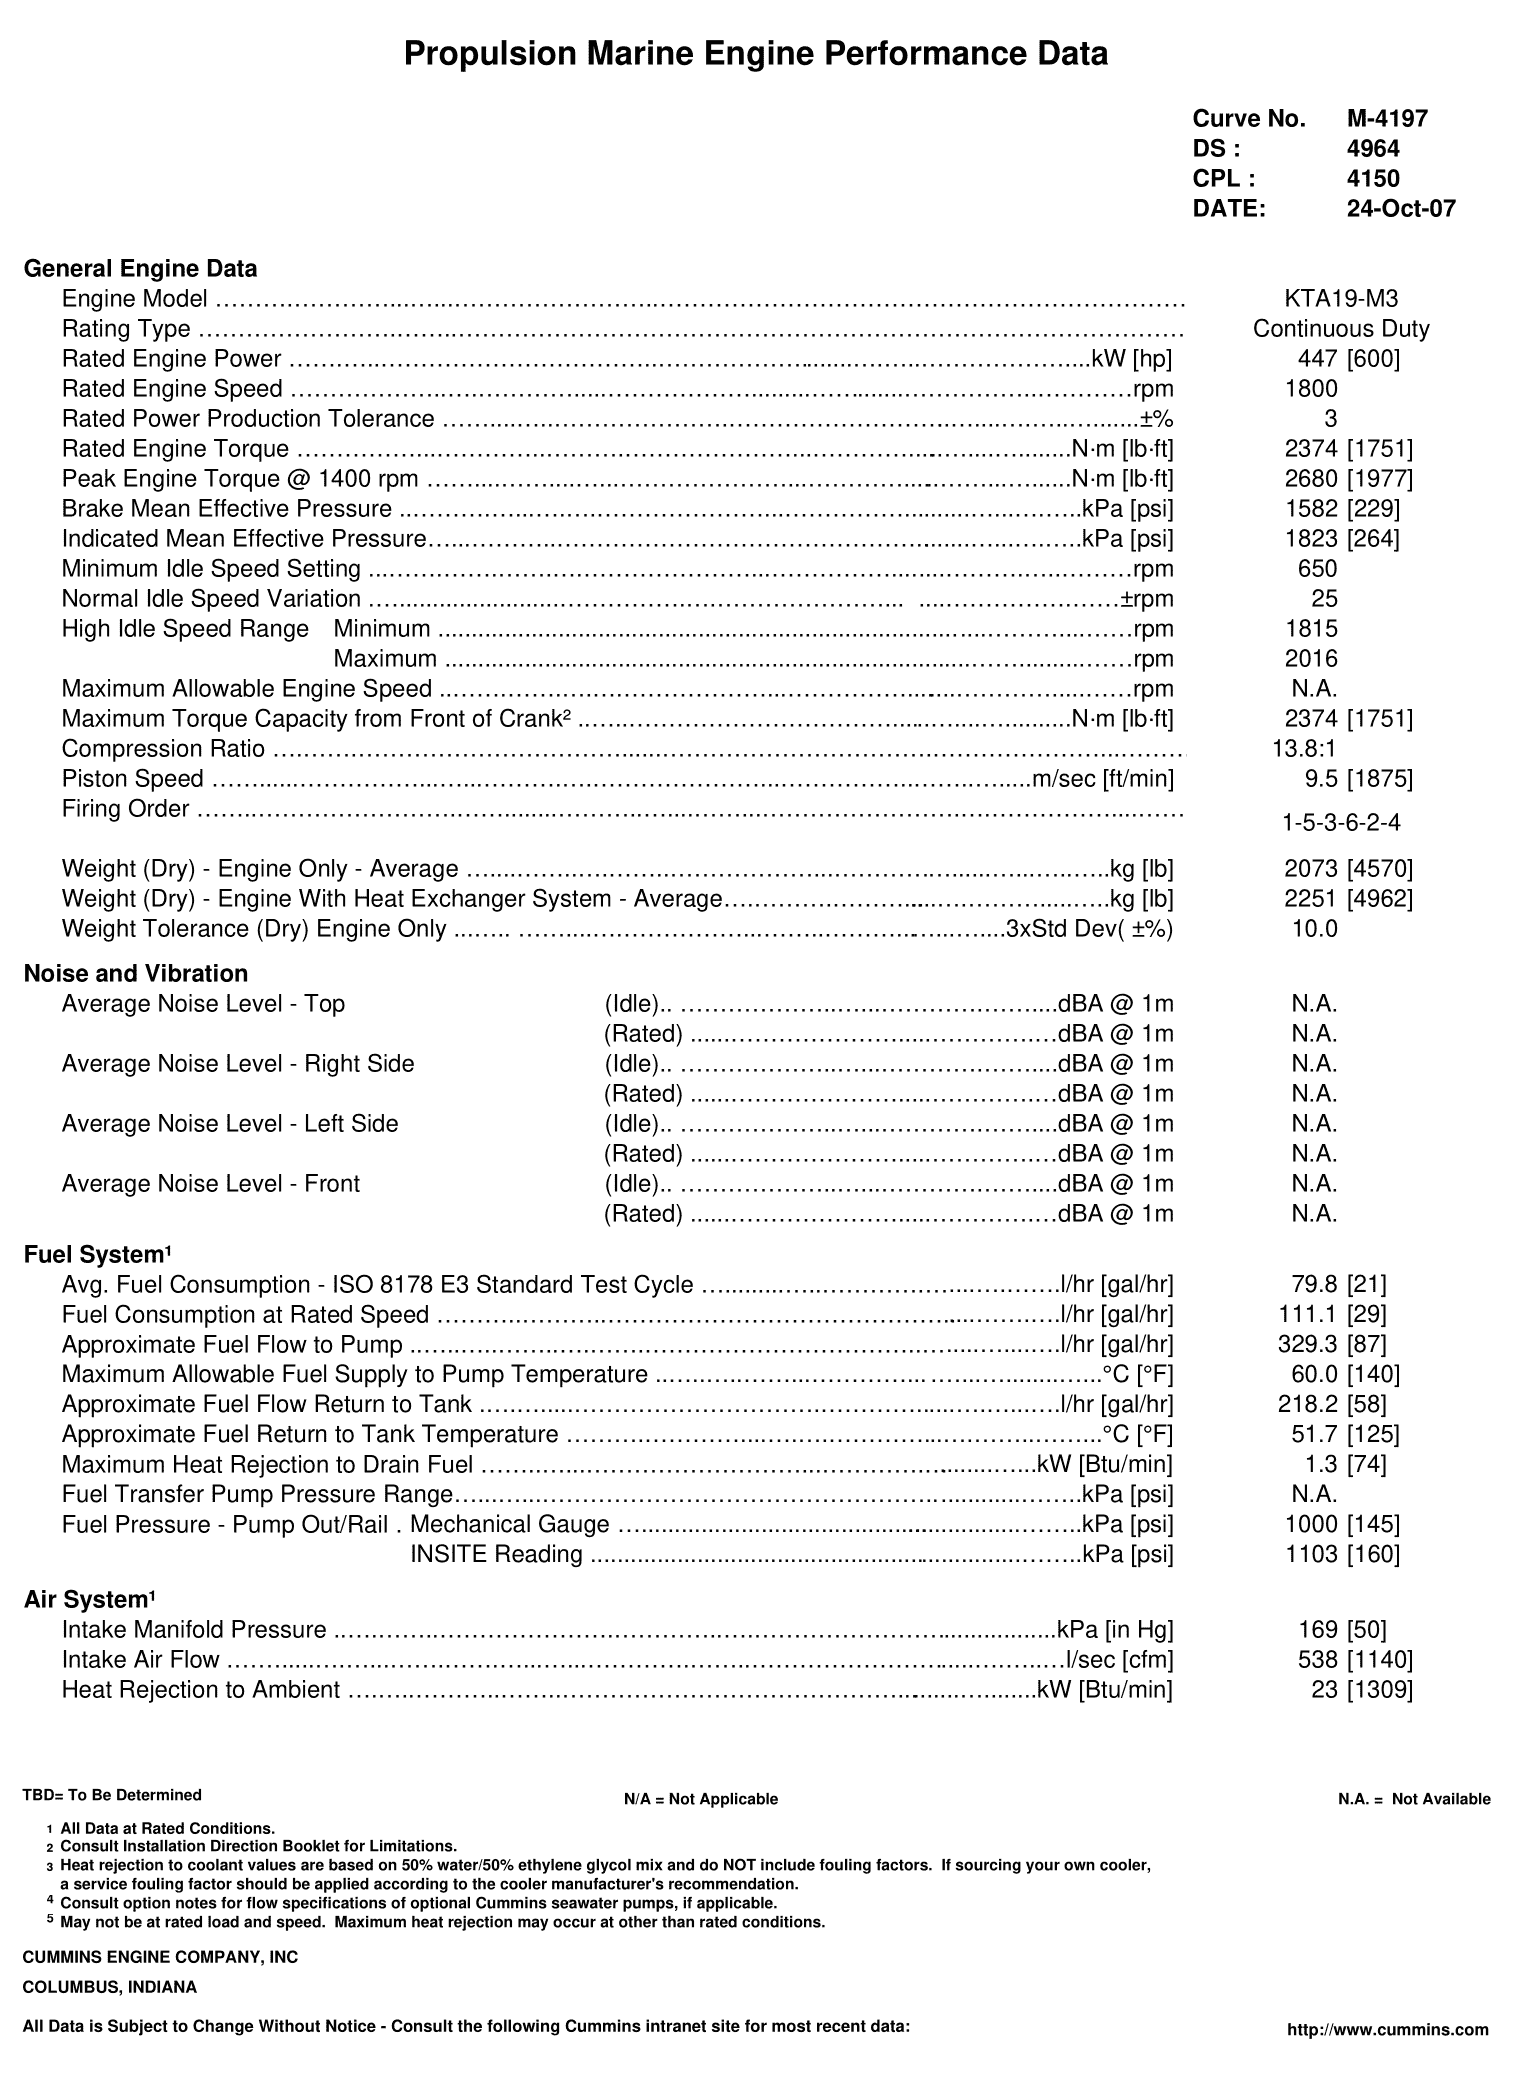 Cummins KTA19-M3 600 HP datasheet